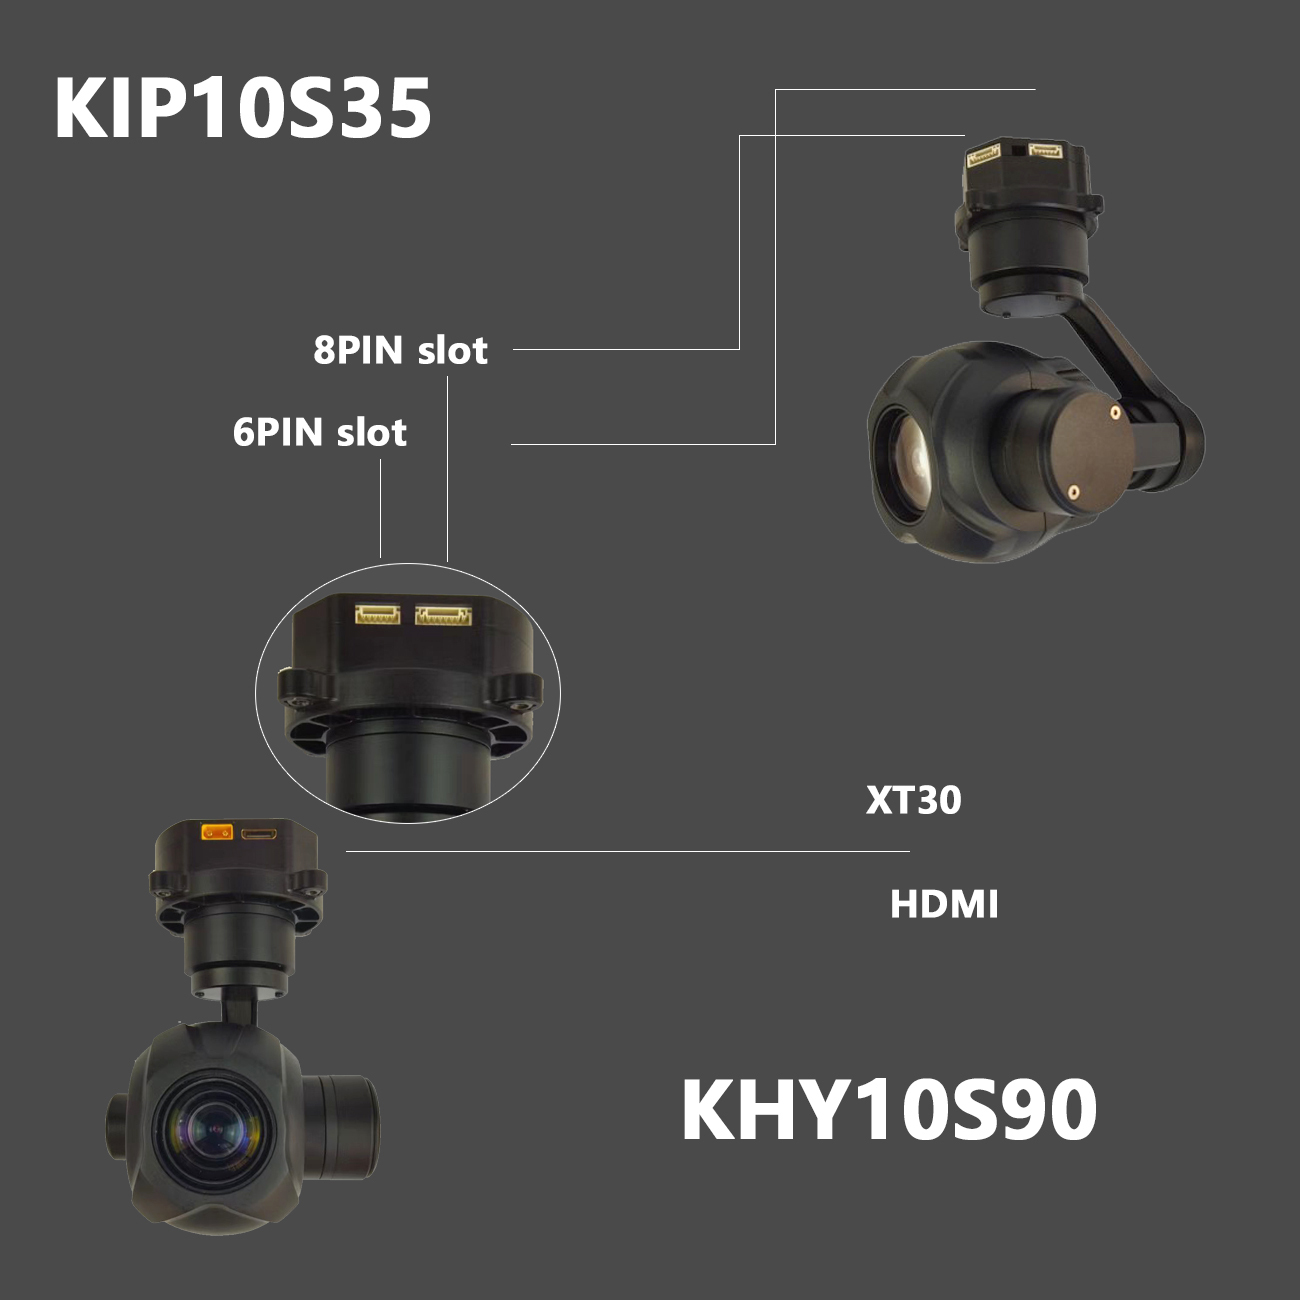 KHY10S90 10x Optical zoom IRCUT 3-Axis Gimbal camera, IP/HDMI output